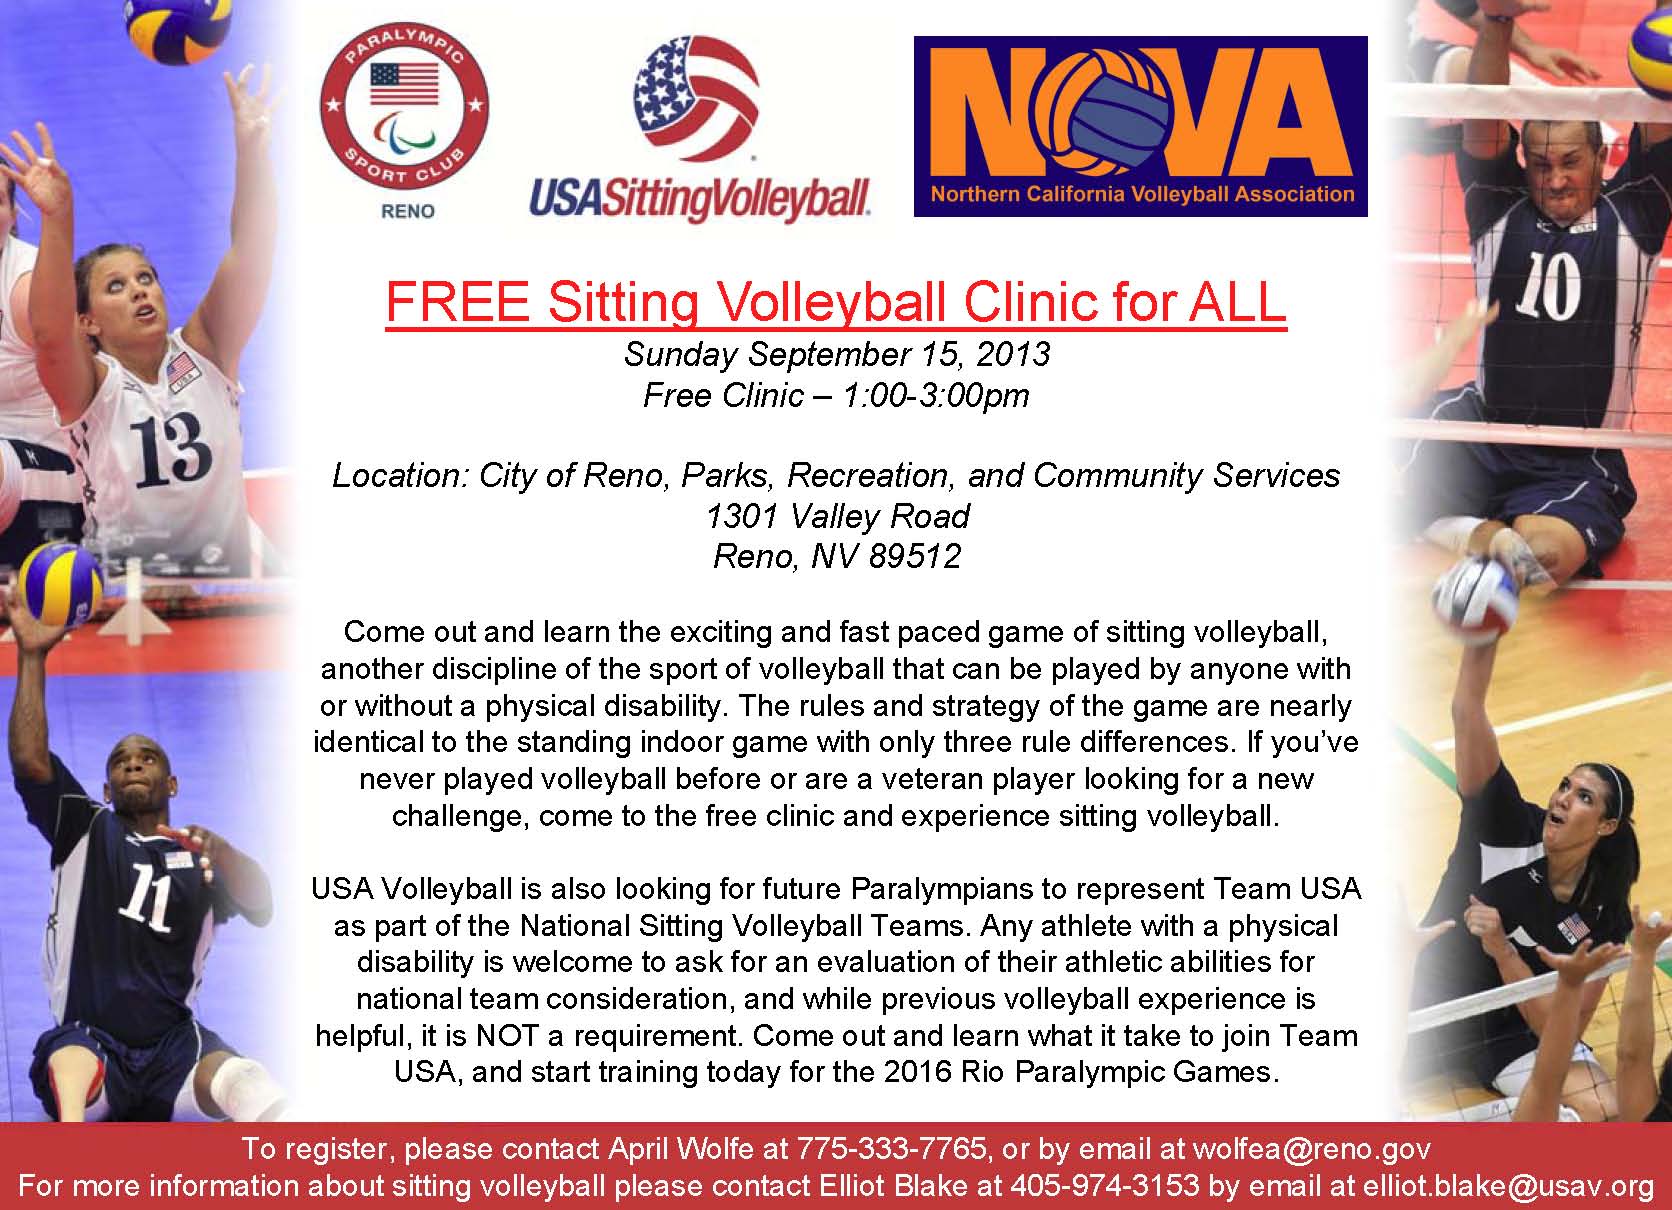 FREE Sitting Clinic coming to Reno! NCVA